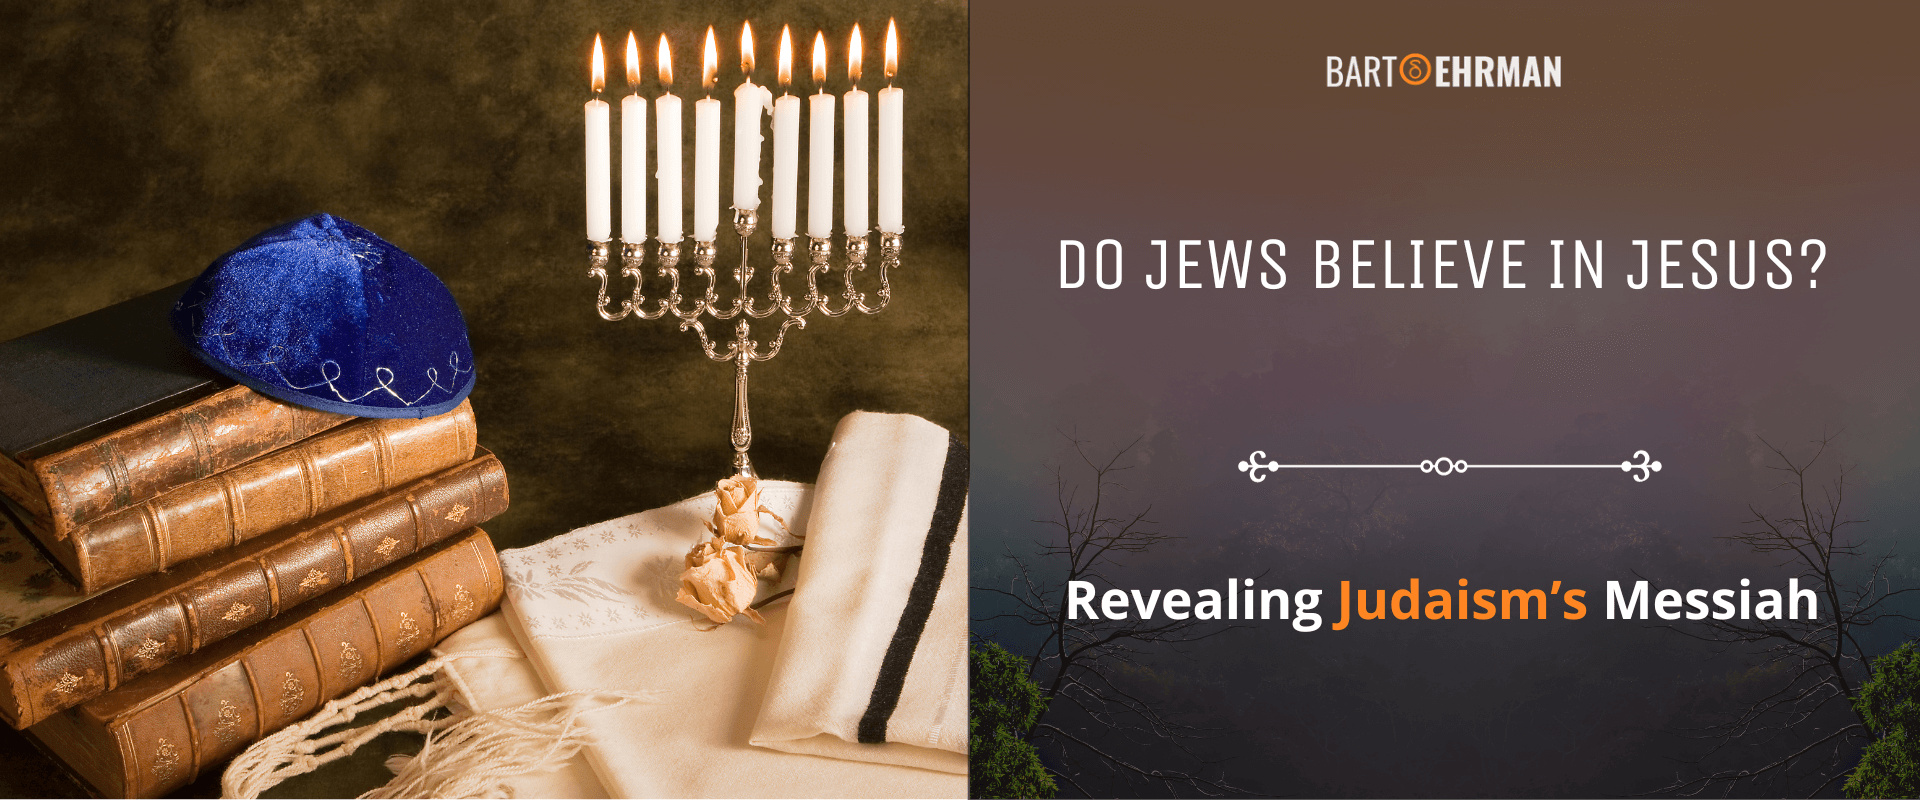 Do Jews Believe in Jesus - Revealing Judaism’s Messiah